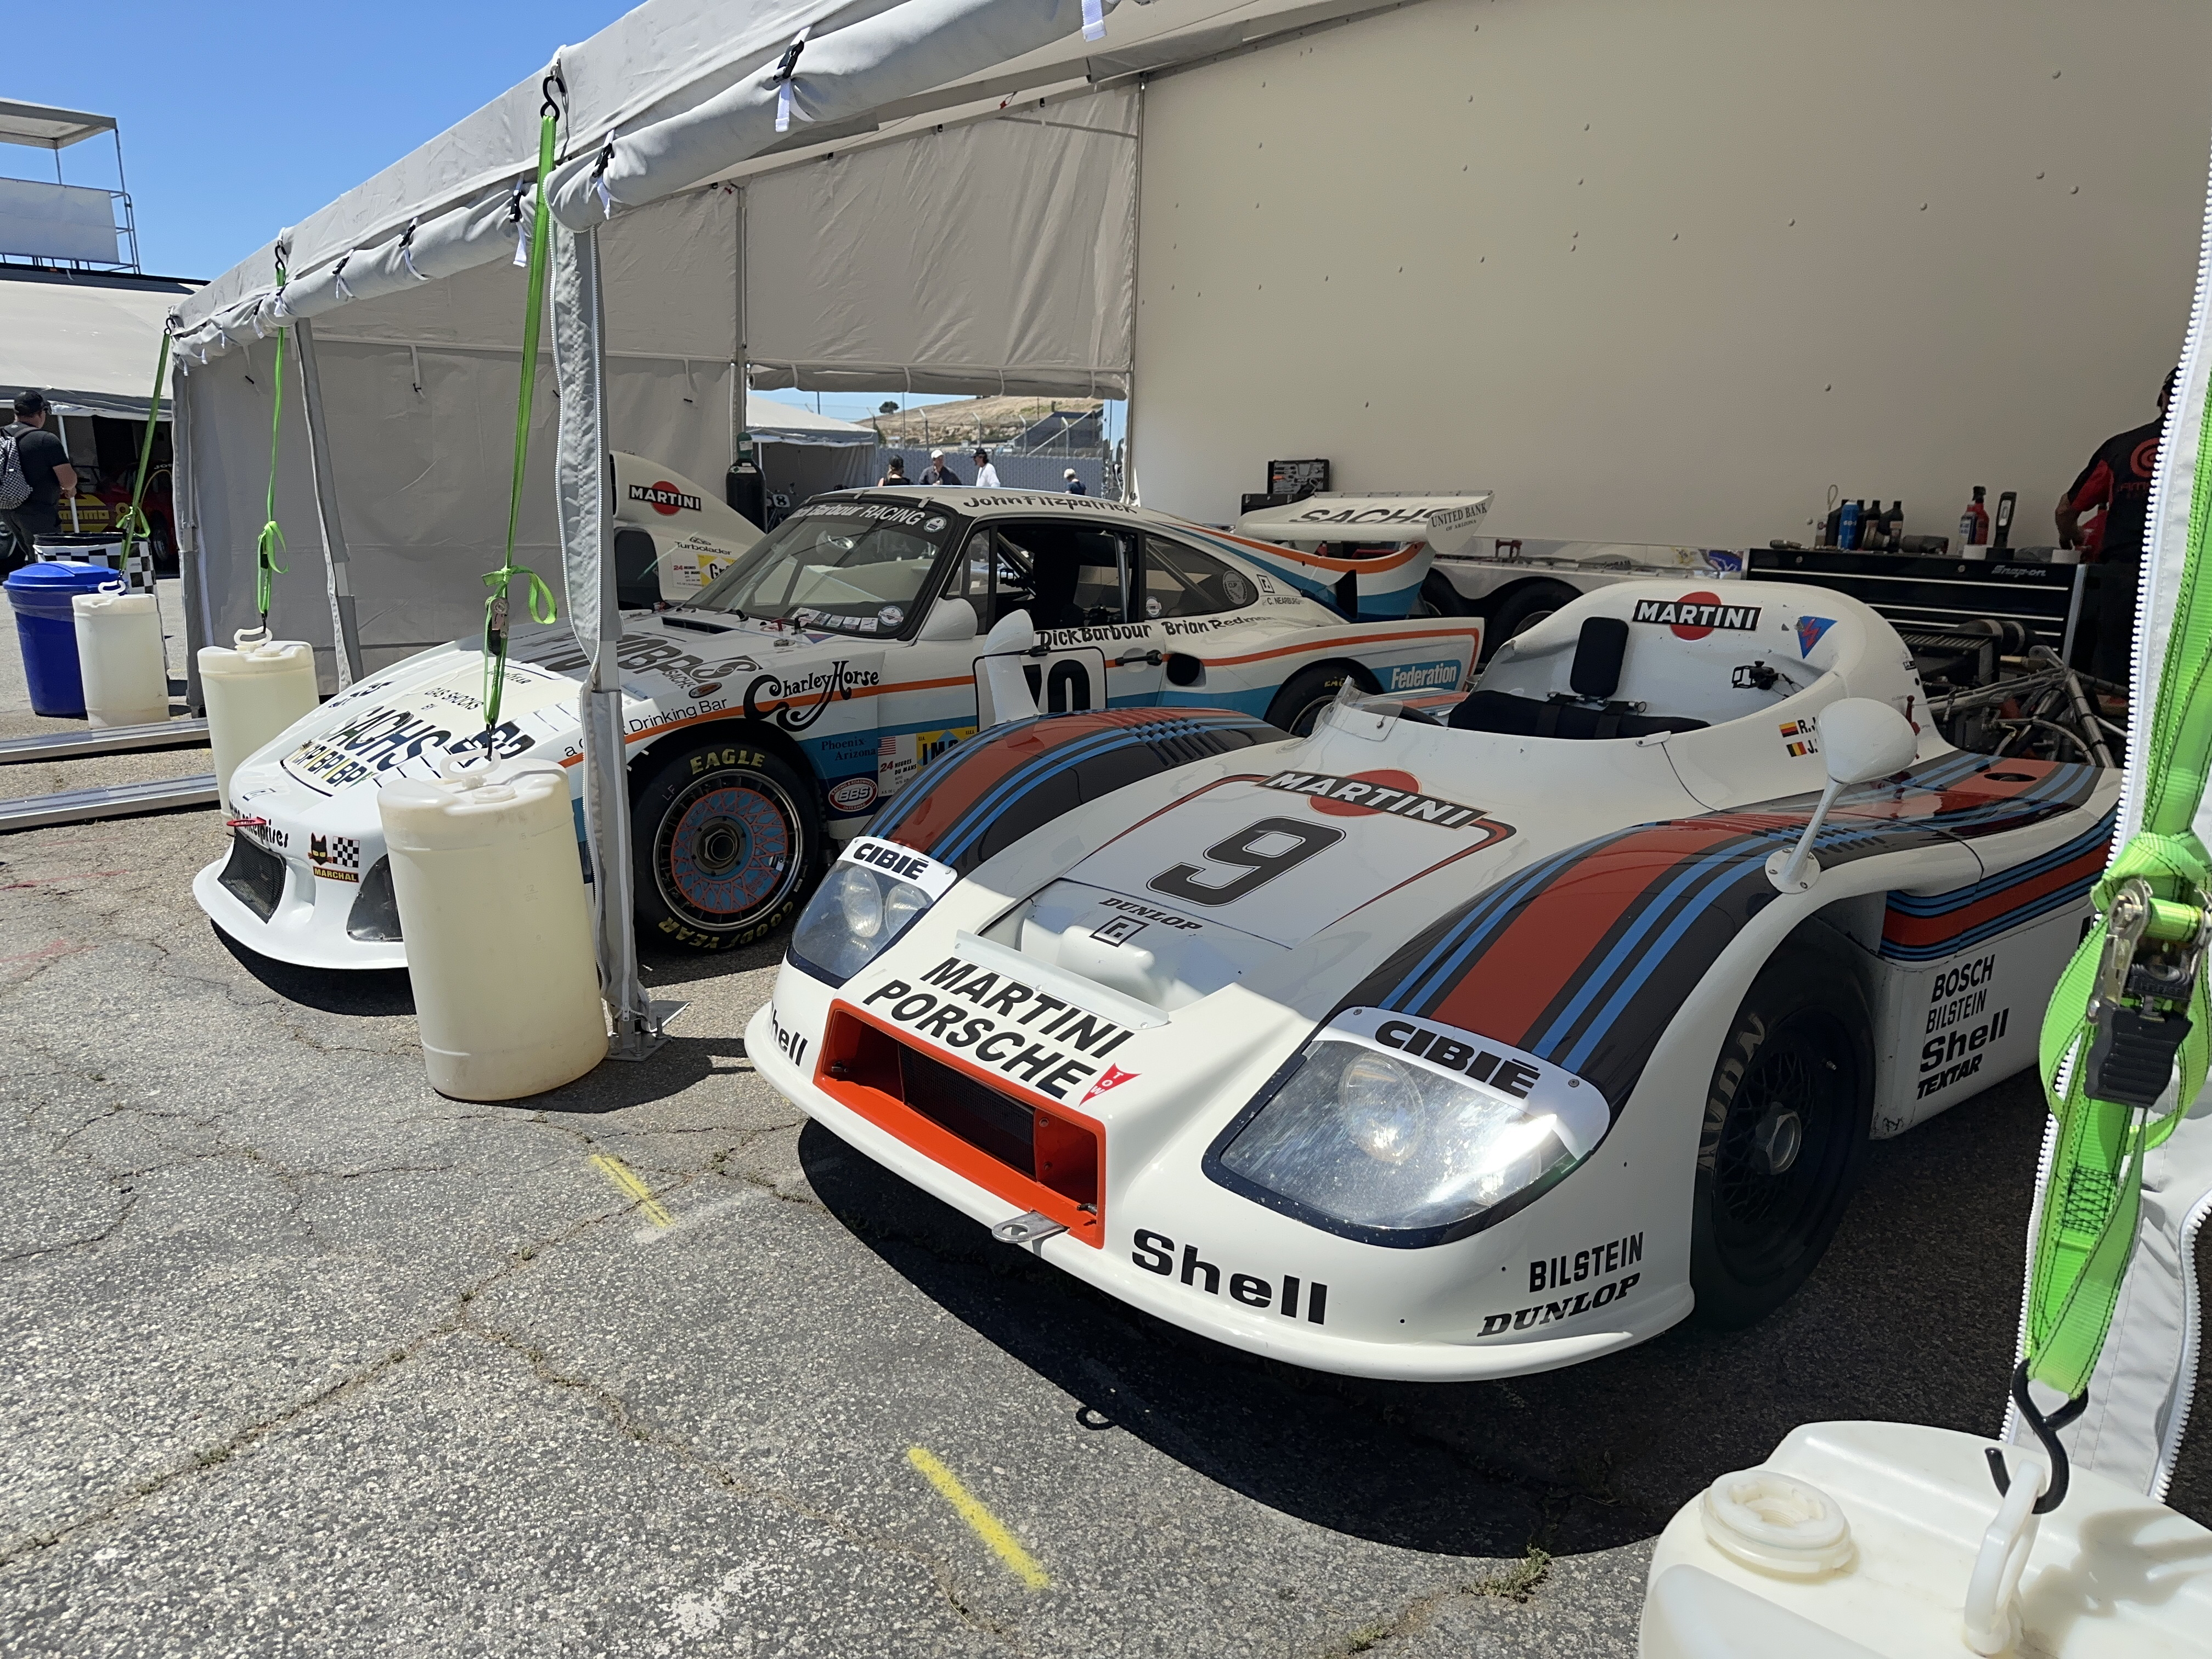 A slant-nose 911 race car and a striking Spyder LeMans race car in Porsche-Martini livery